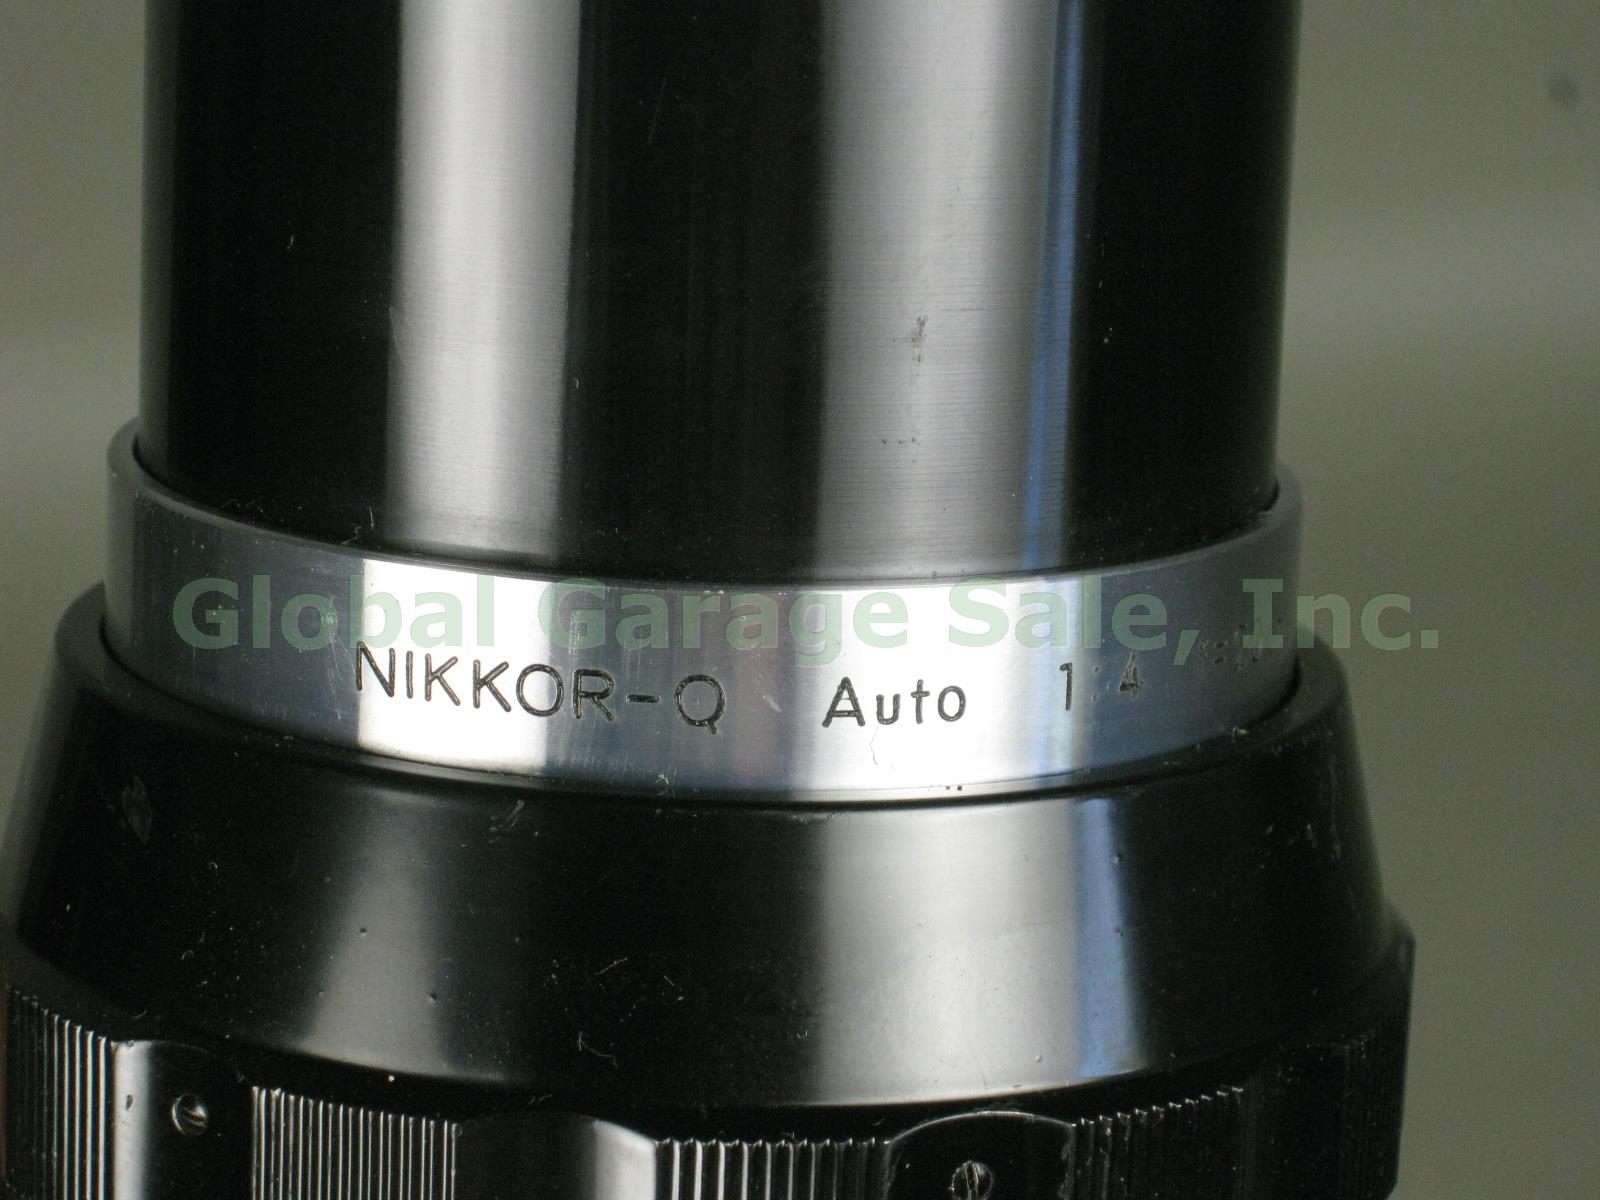 Nikkormat EL + Nikkor-Q 200mm 1:4 Zoom Lens Nikon FB5 Case Kiron 35-135mm Macro 10